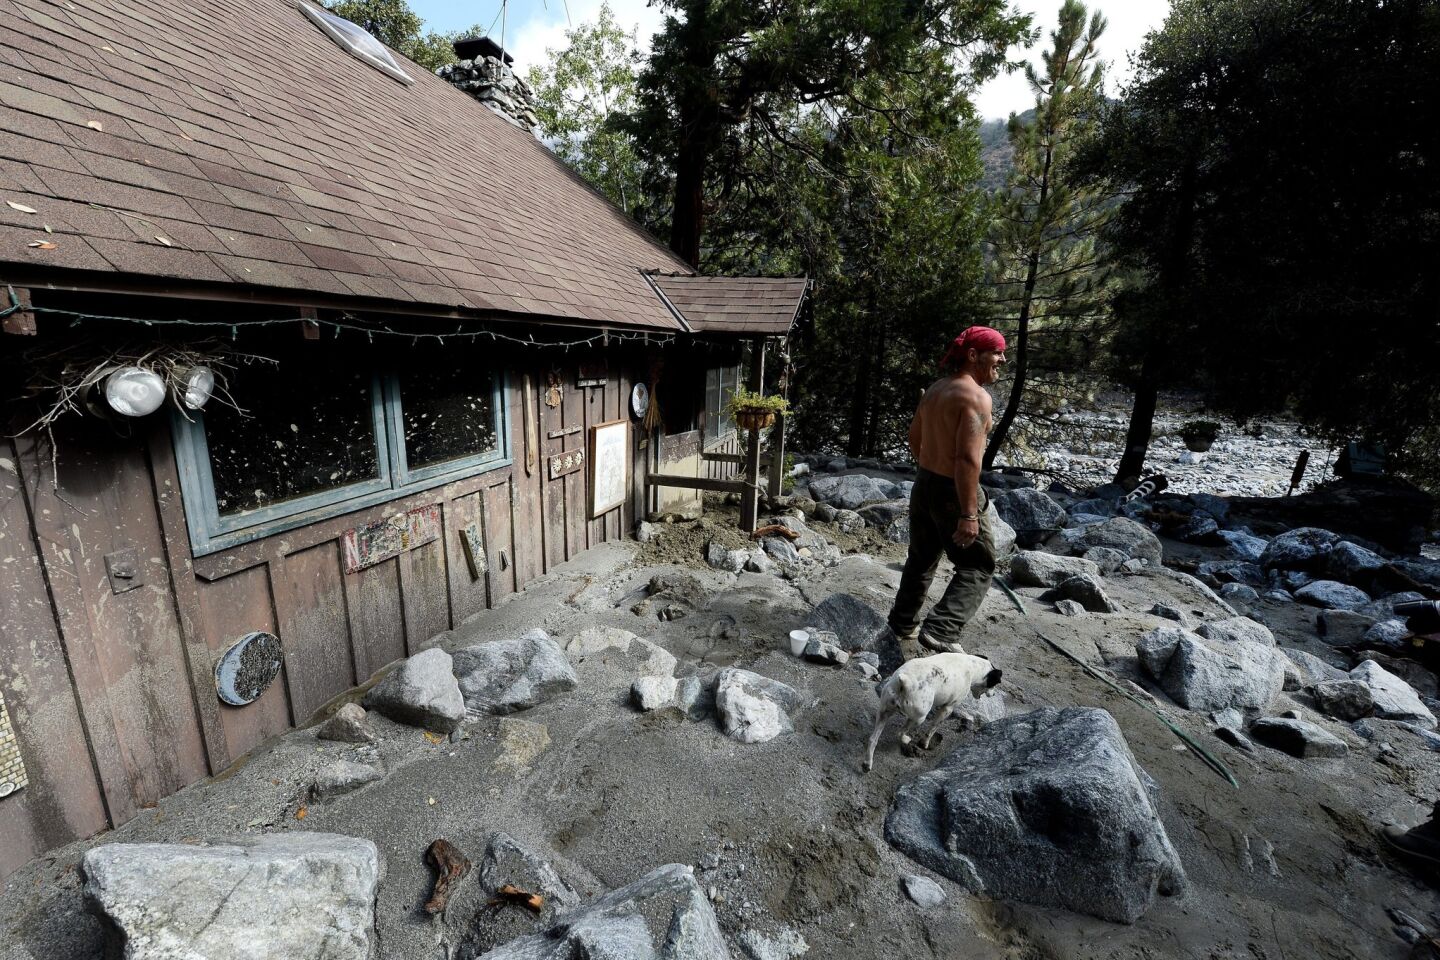 Rainfall causes debris flow and mudslides in California